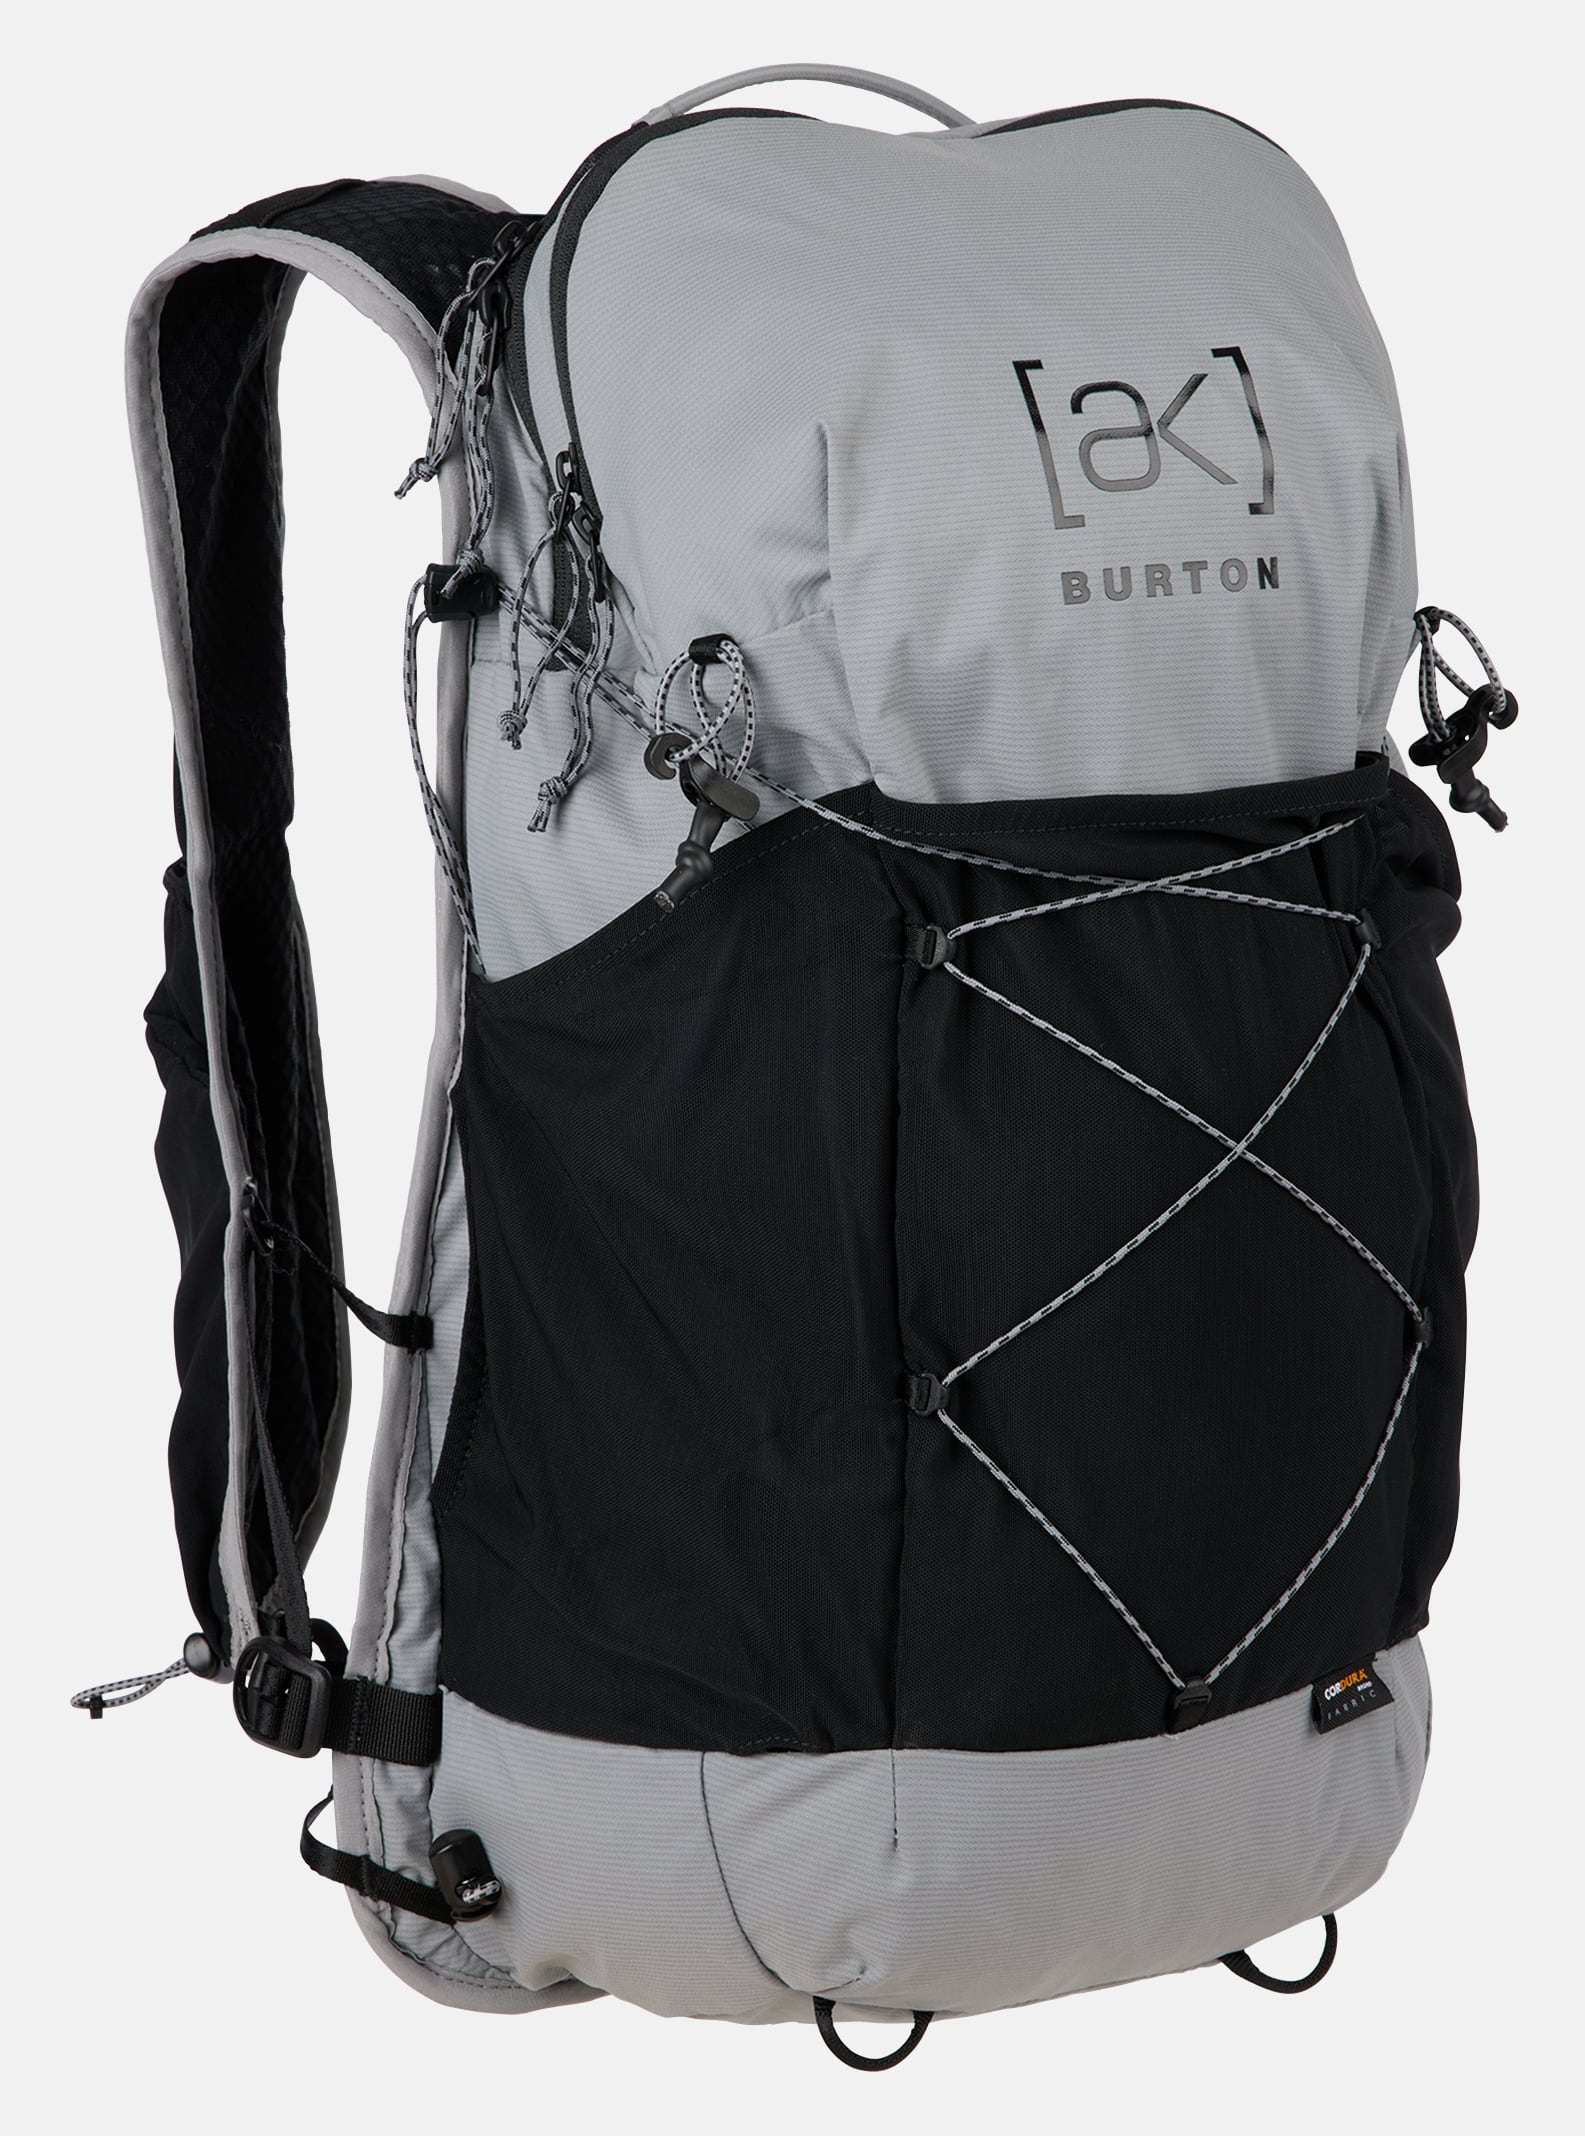 ak] Surgence 20L Backpack | Burton.com Winter 2023 ES